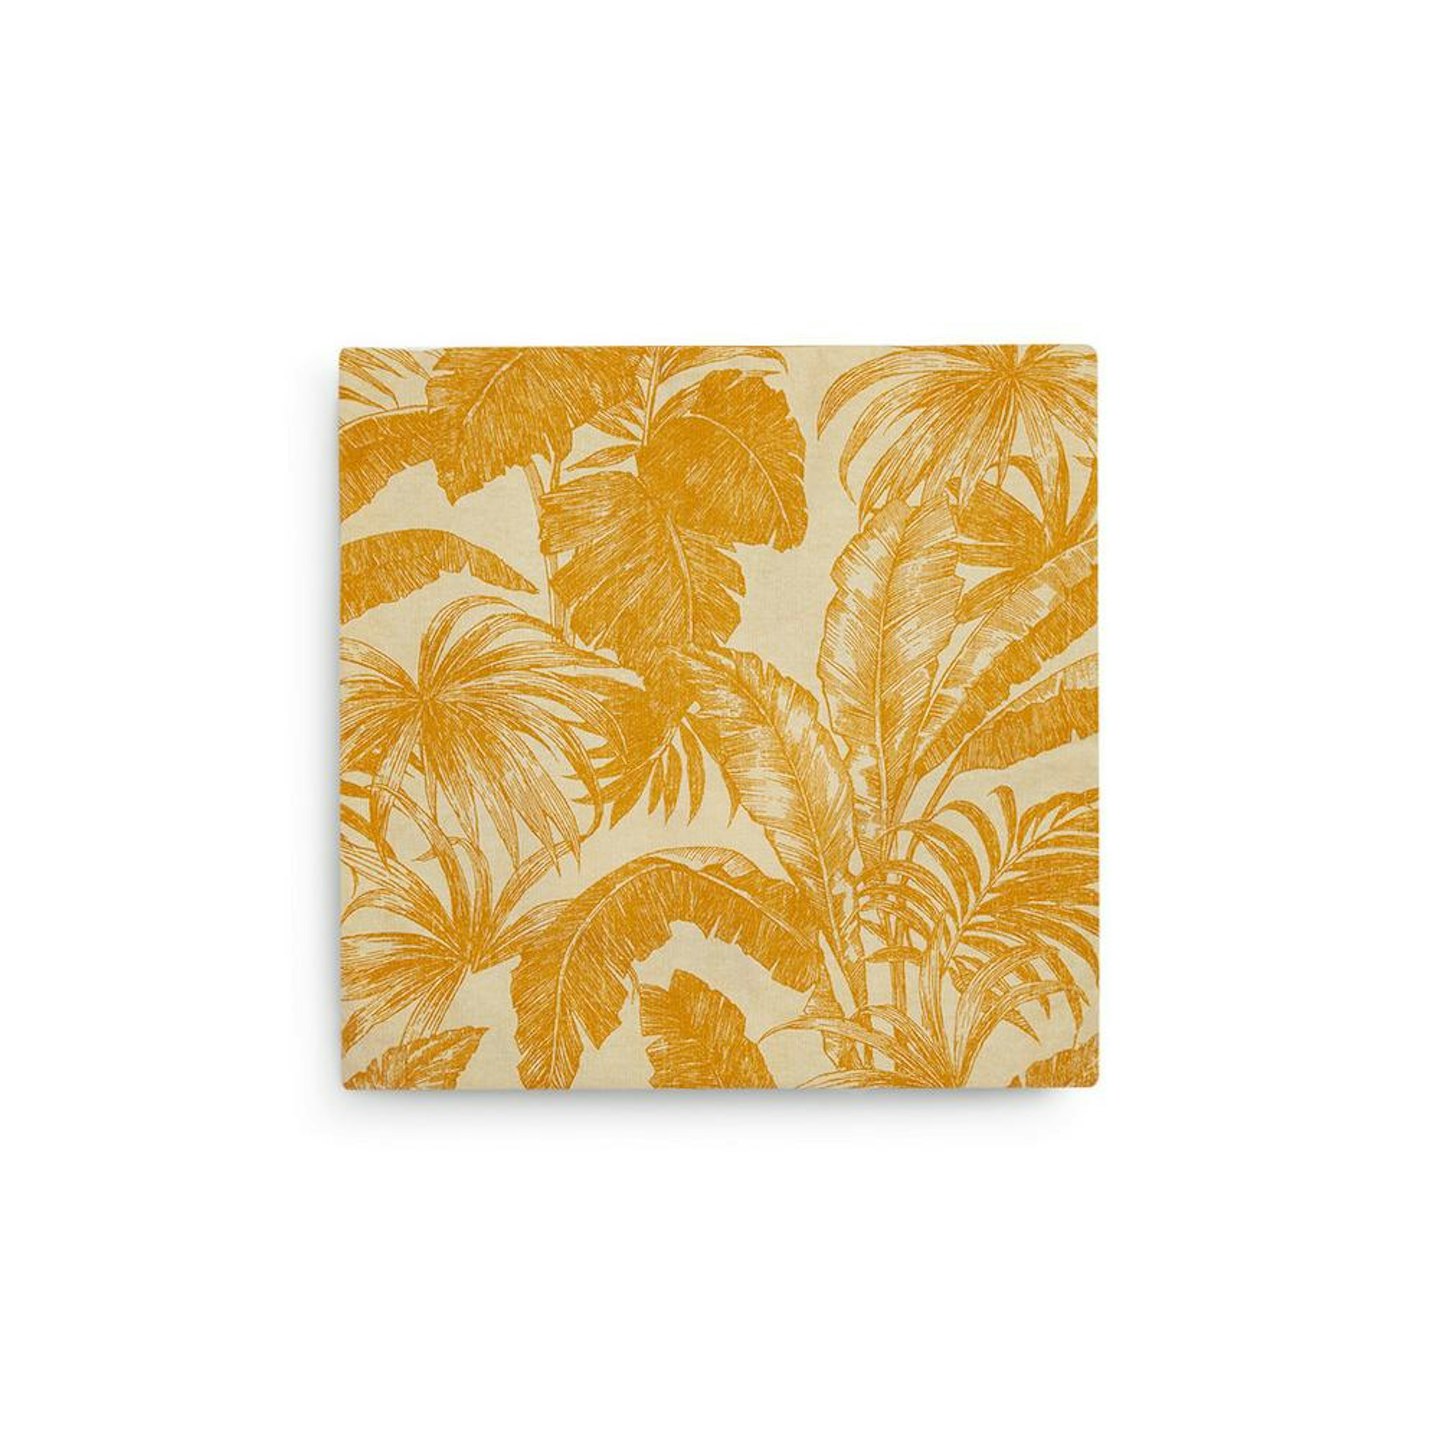 Mustard Yellow Leaf Print Cushion Cover £3.50